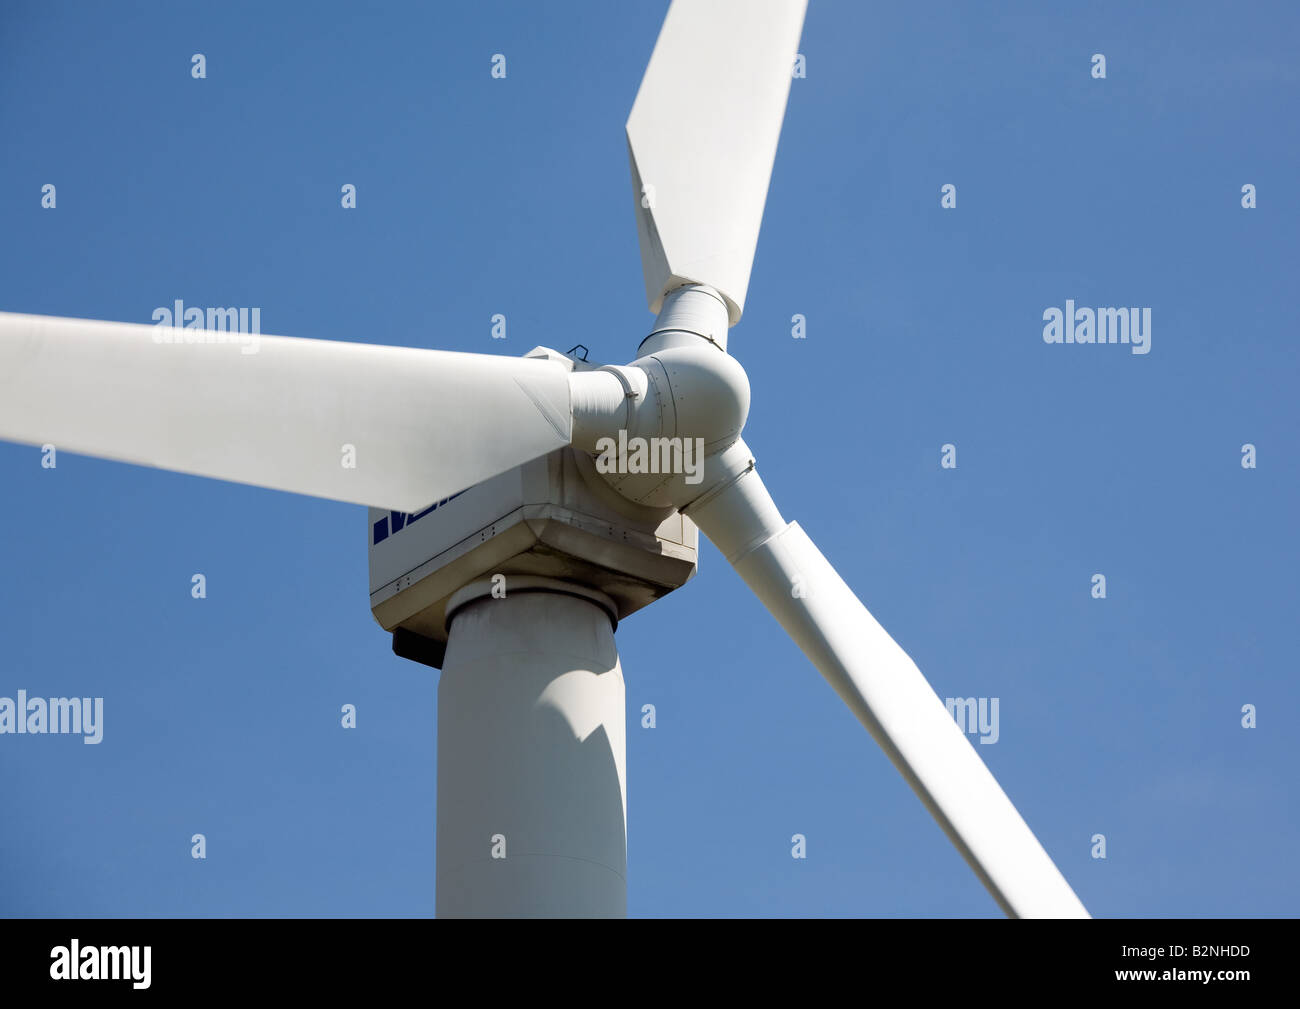 A Vestas wind turbine providing diverse renewable energy at Coal Clough Windfarm, Cliviger, Near Burnley, Lancashire, England Stock Photo